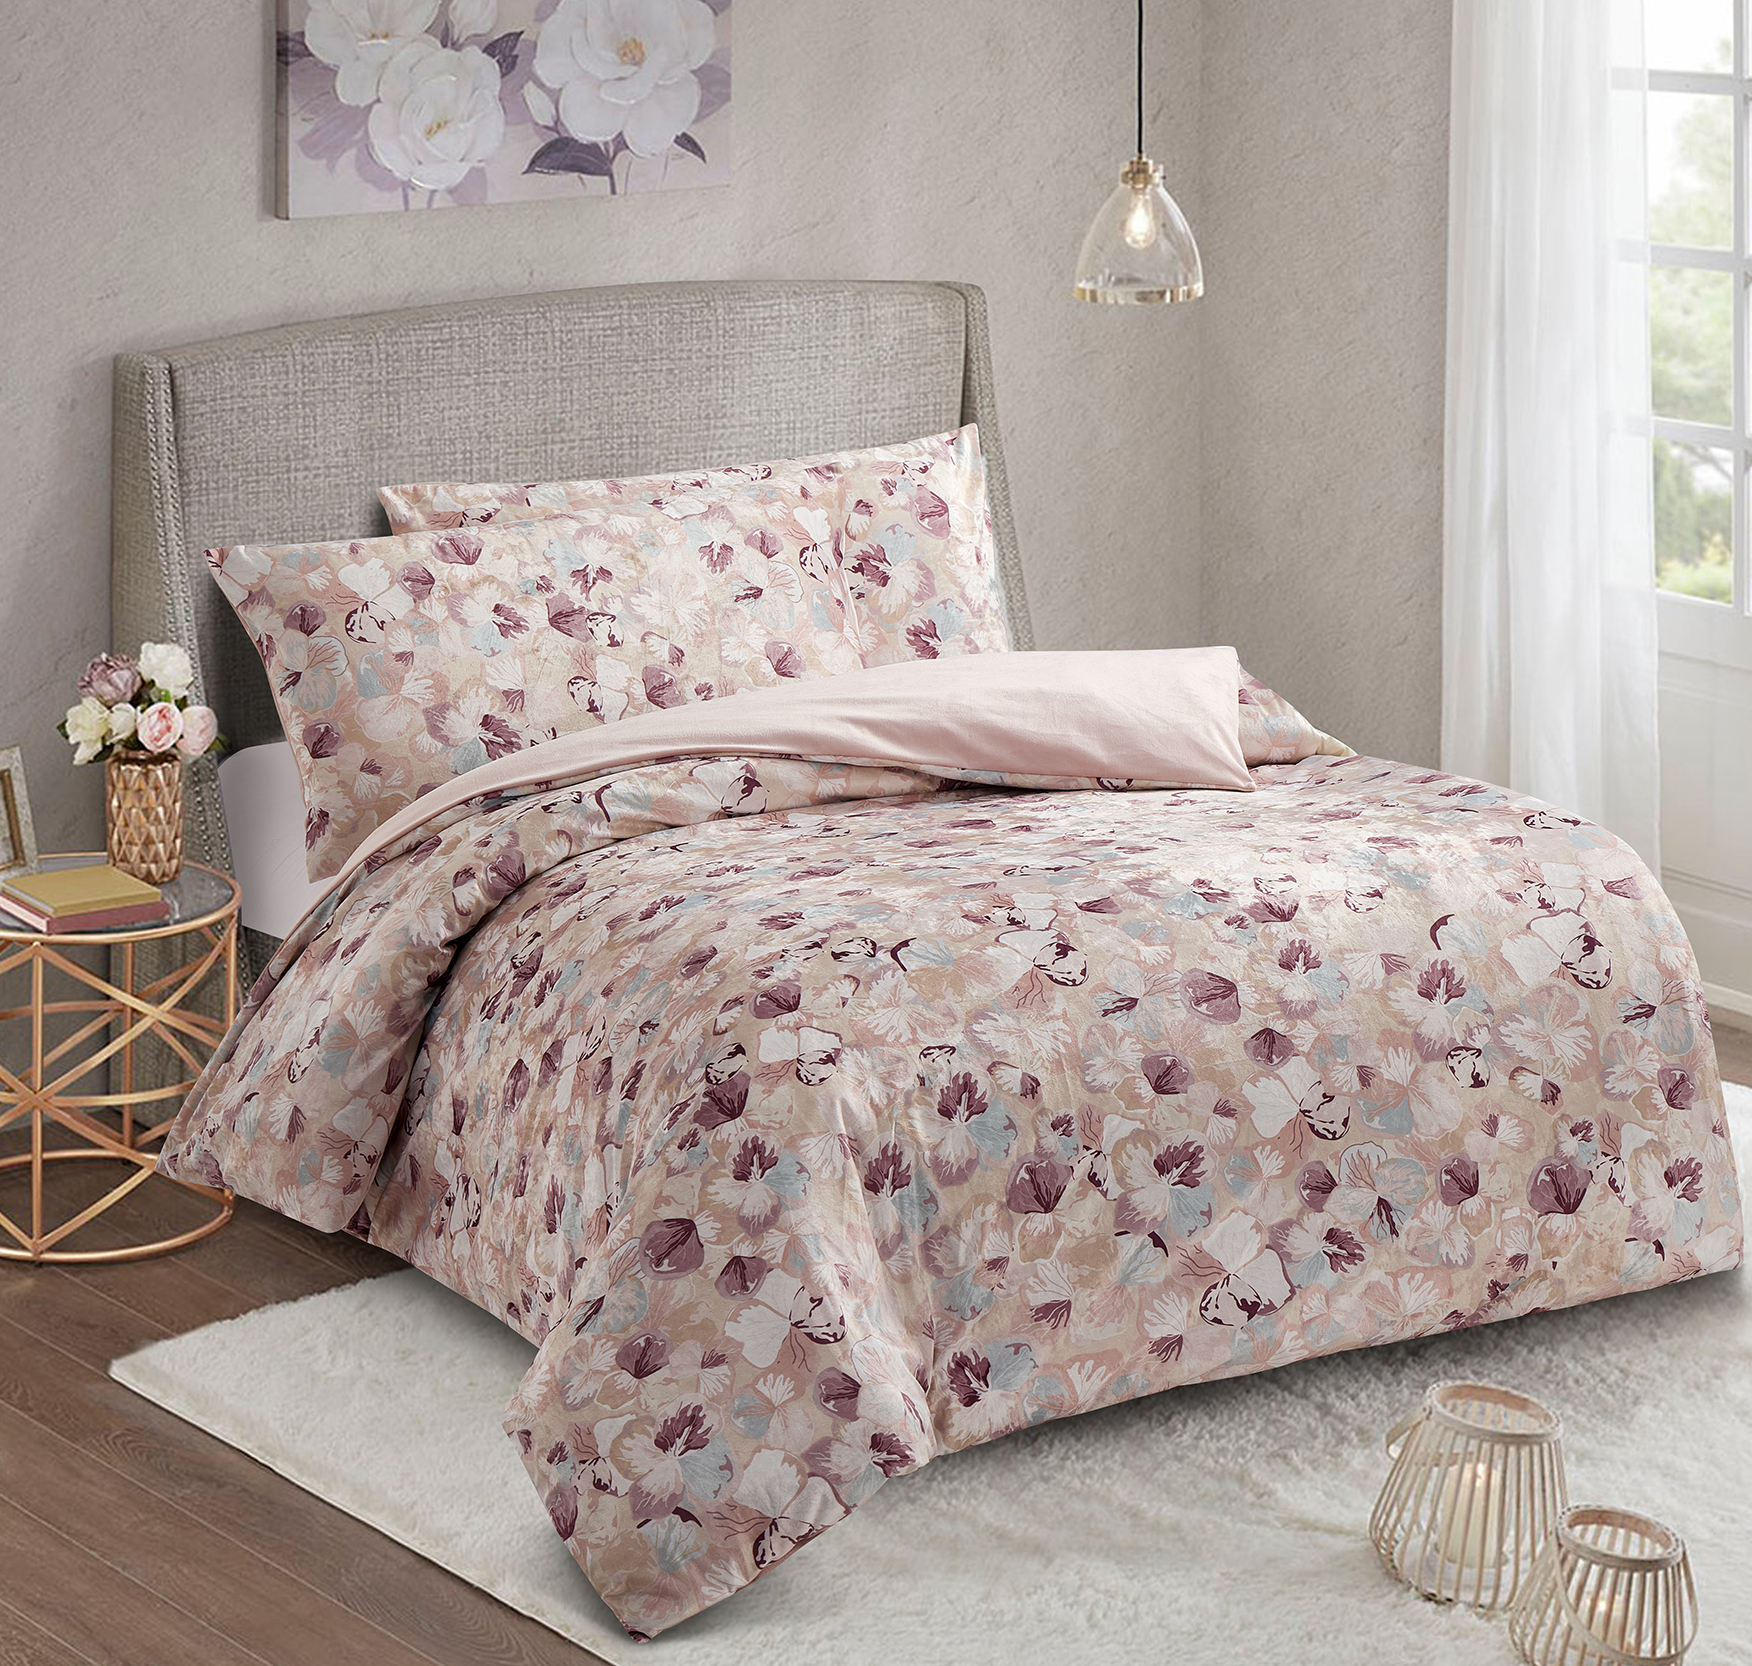 Wholesale Microfiber Queen Size Home Textile Comforter Printed Bedding Set Duvet Cover